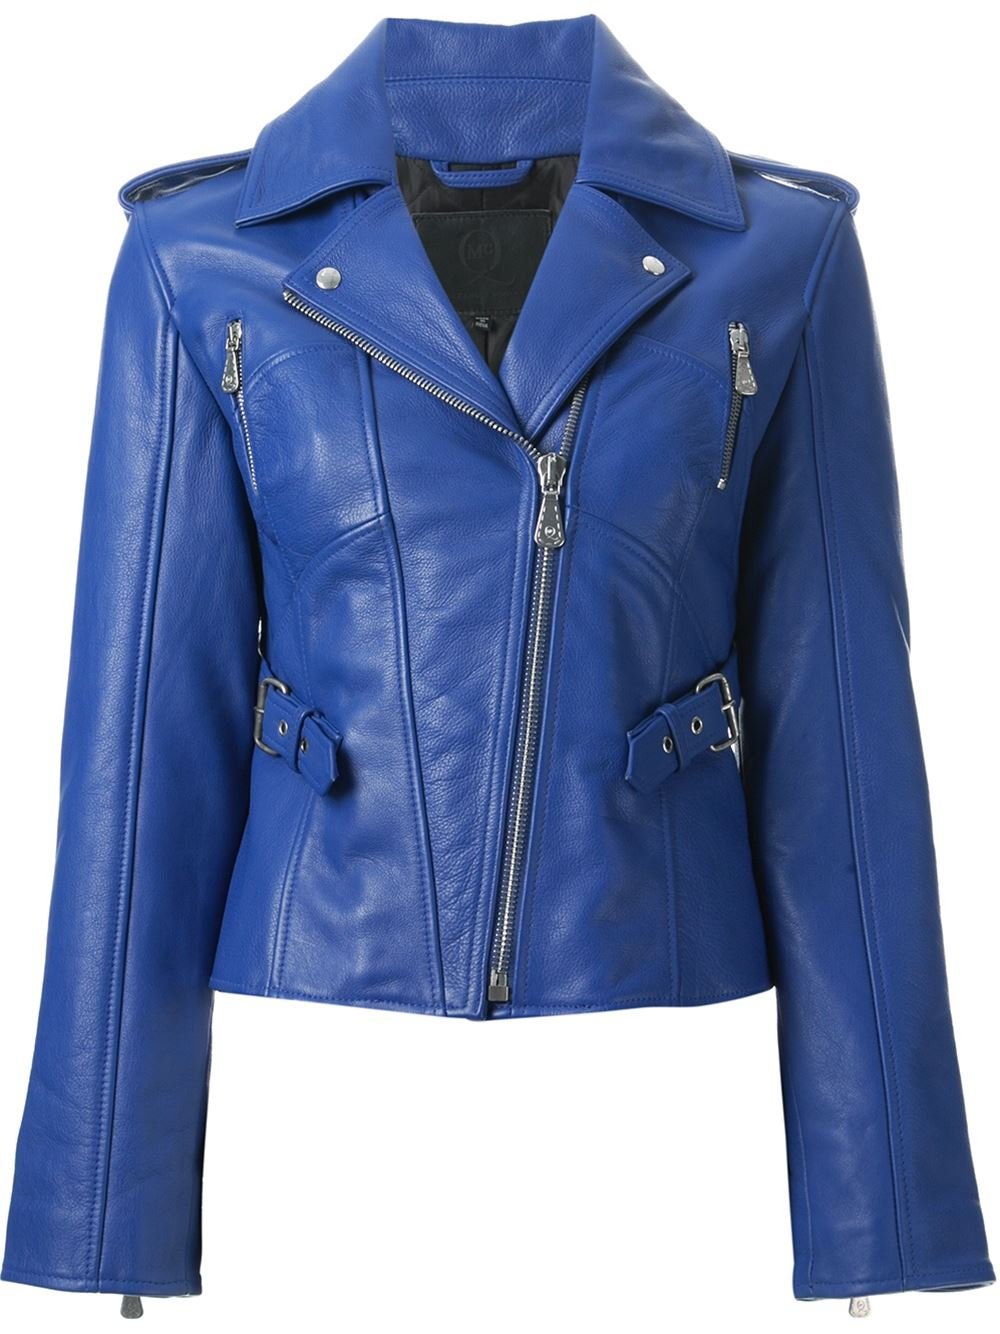 Lyst - Mcq Biker Jacket in Blue